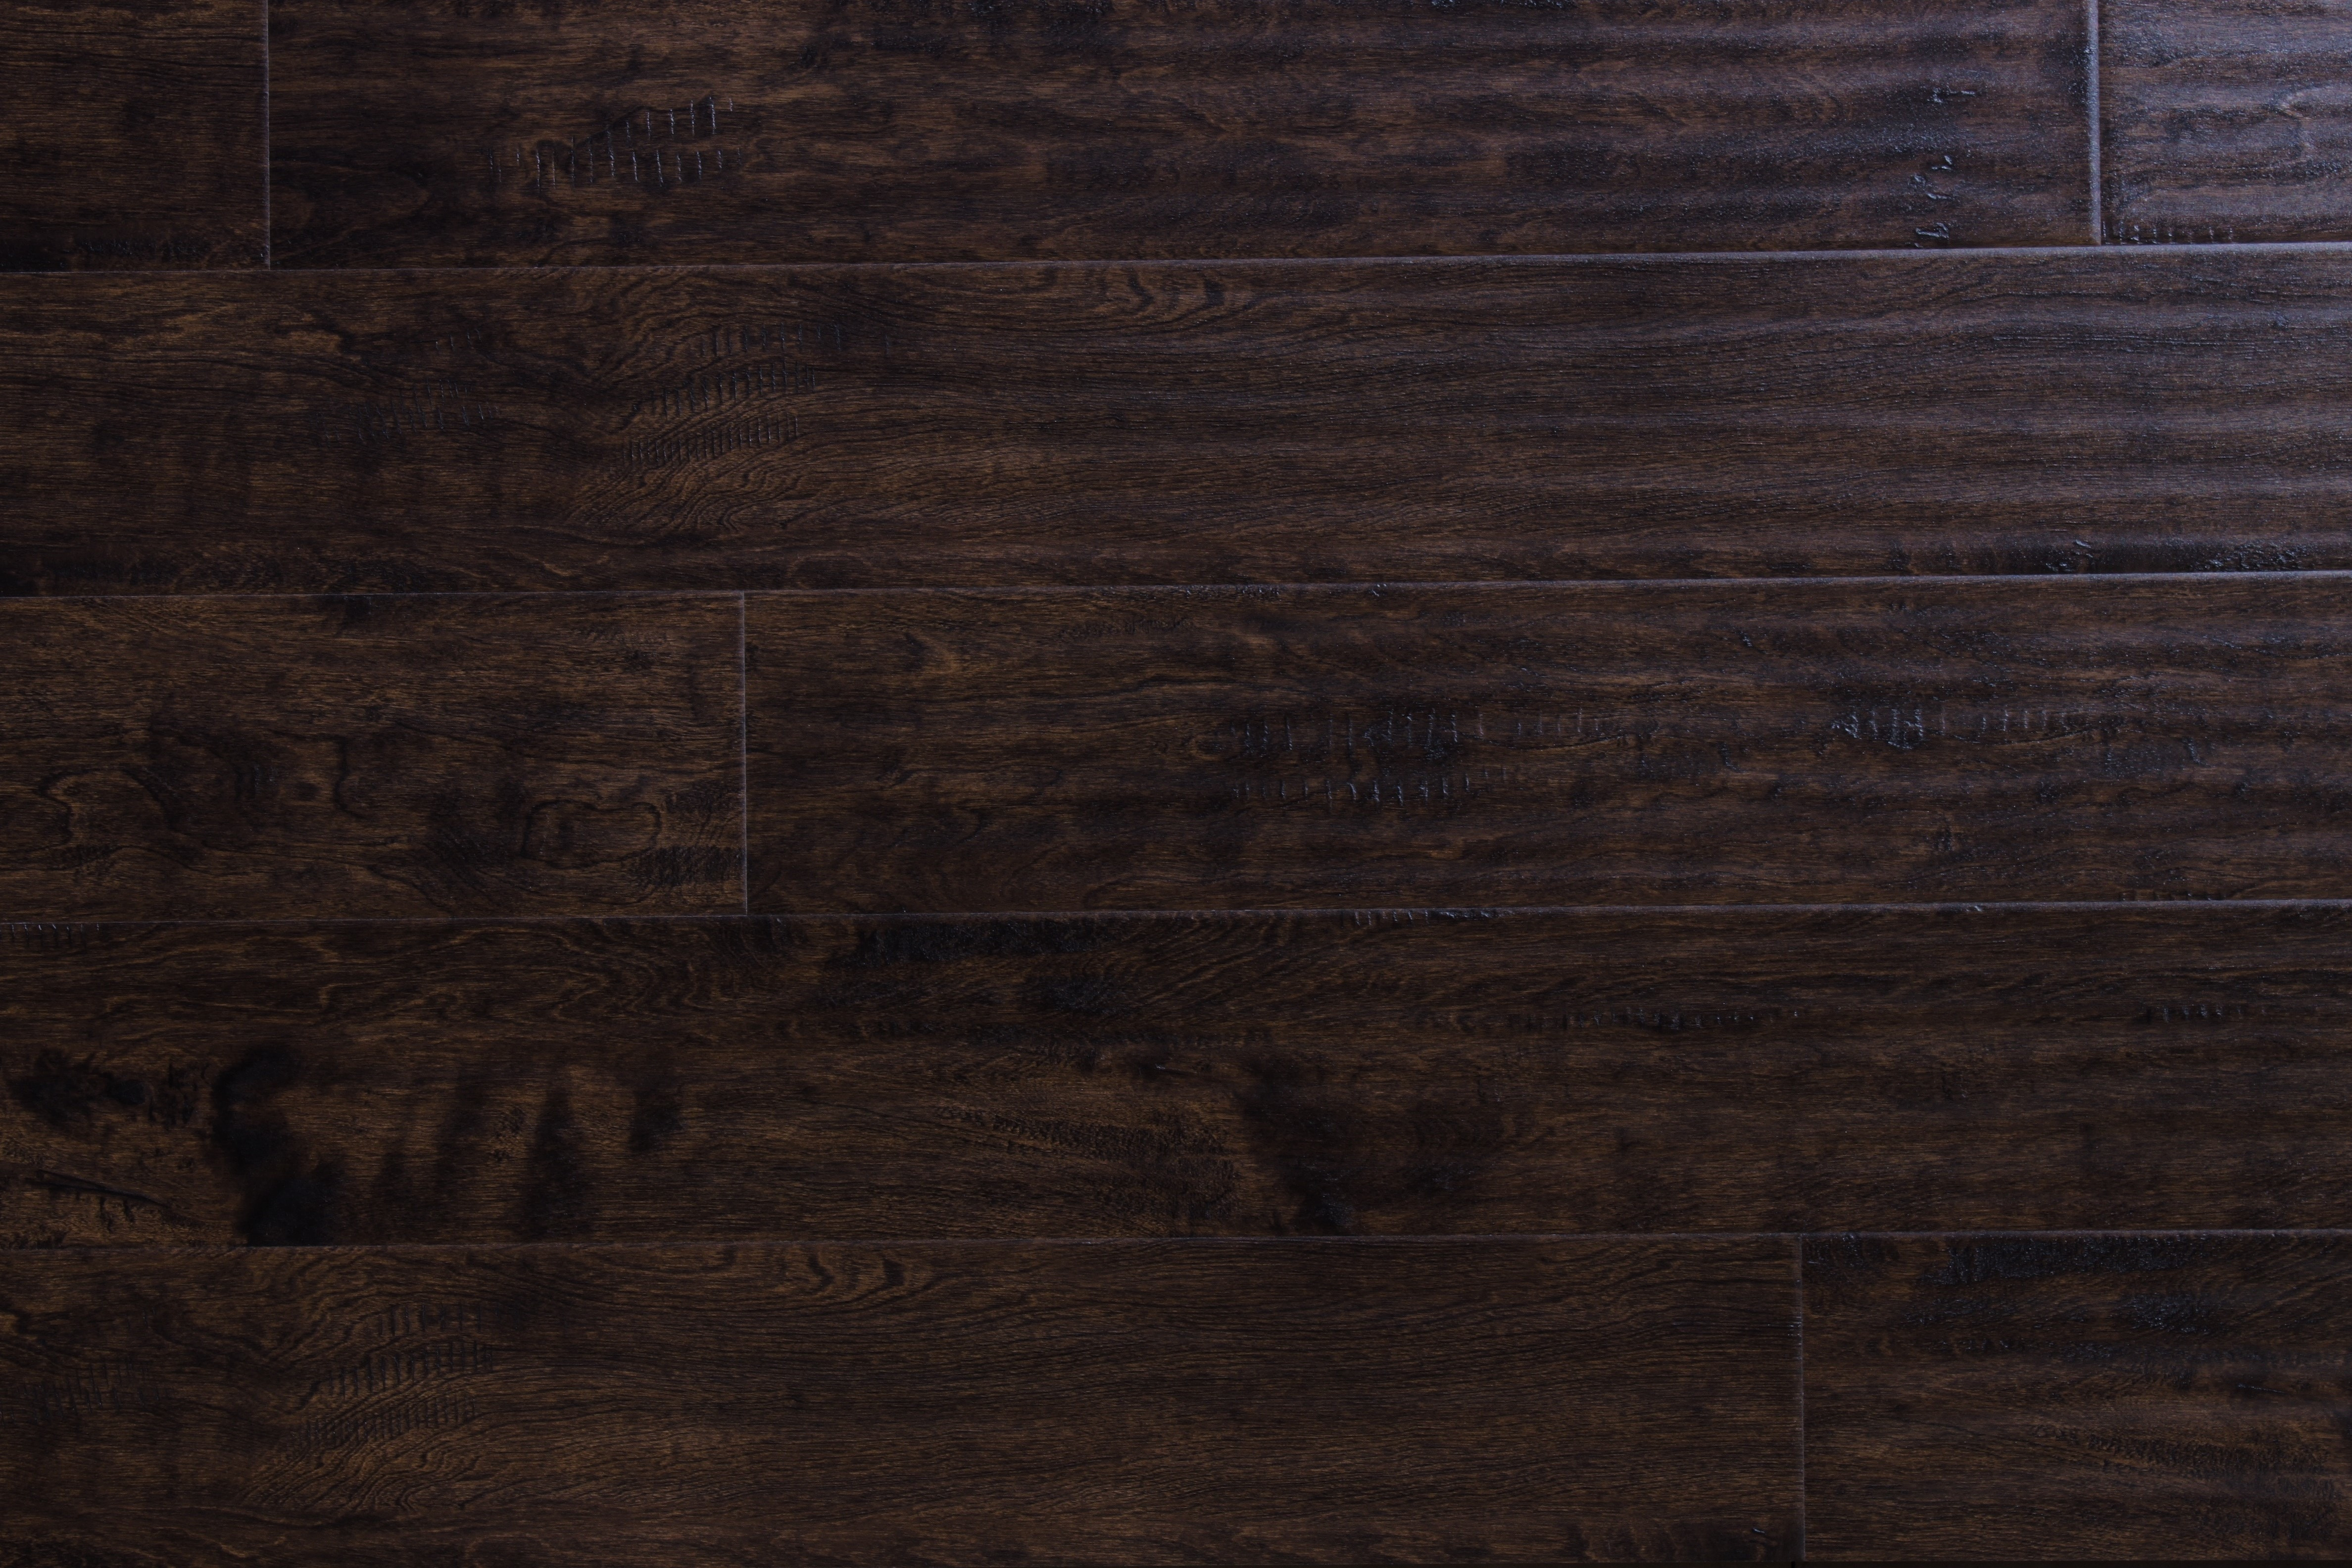 hardwood flooring dark brown of wood flooring free samples available at builddirecta for tailor multi gb 5874277bb8d3c